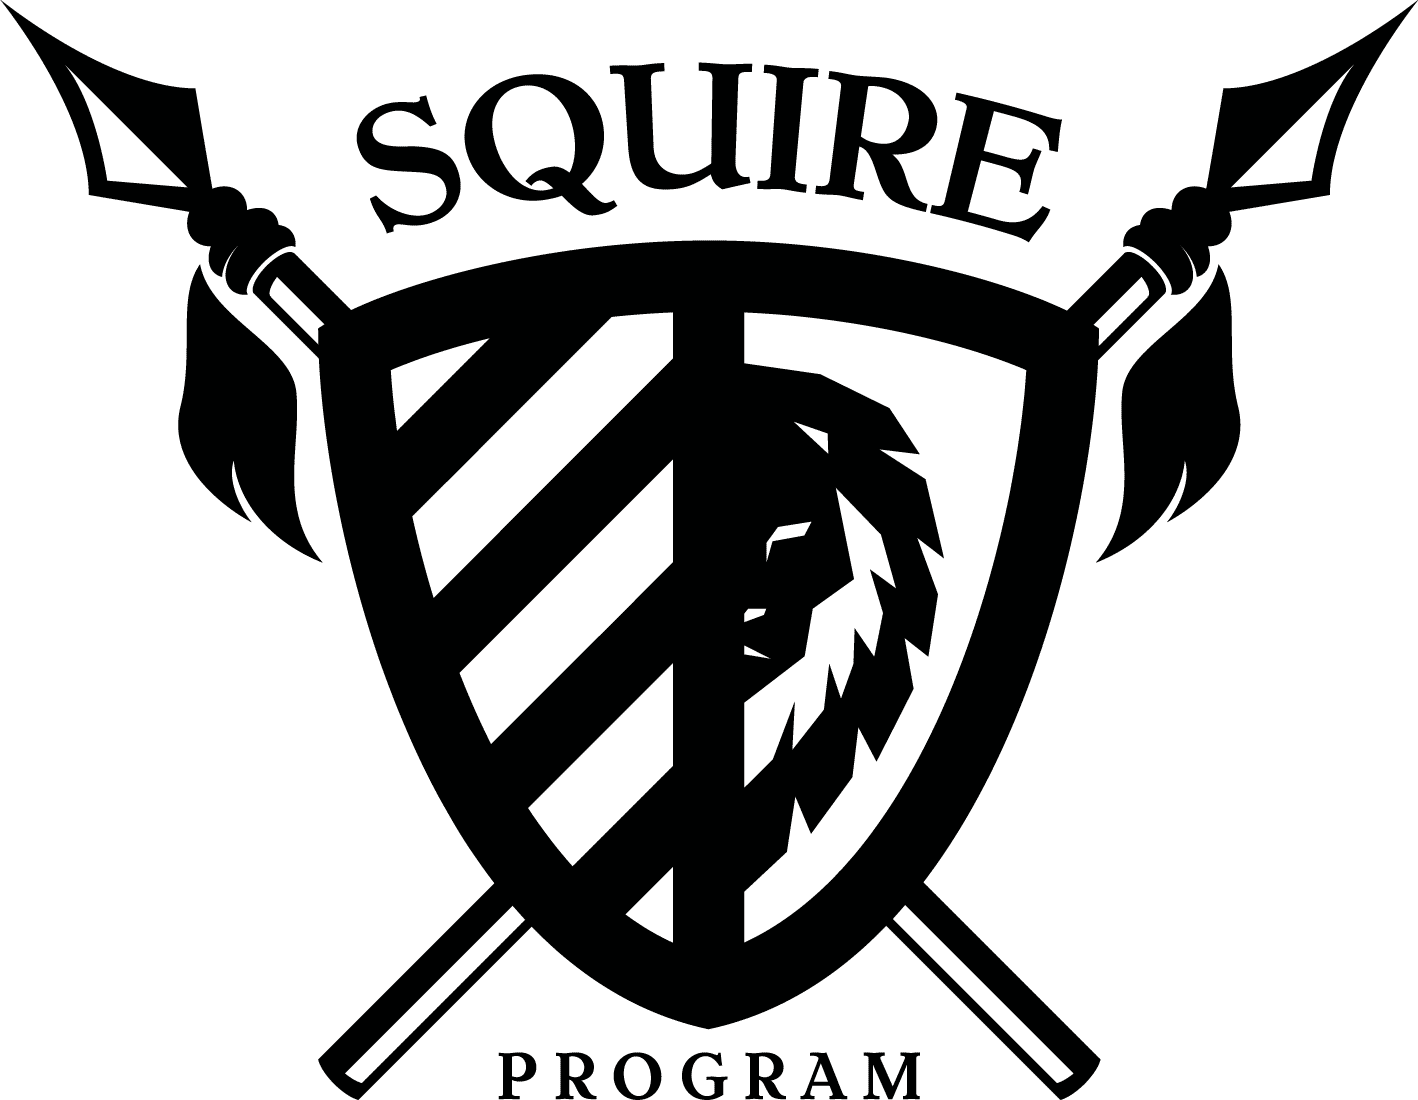 The Squire Program logo